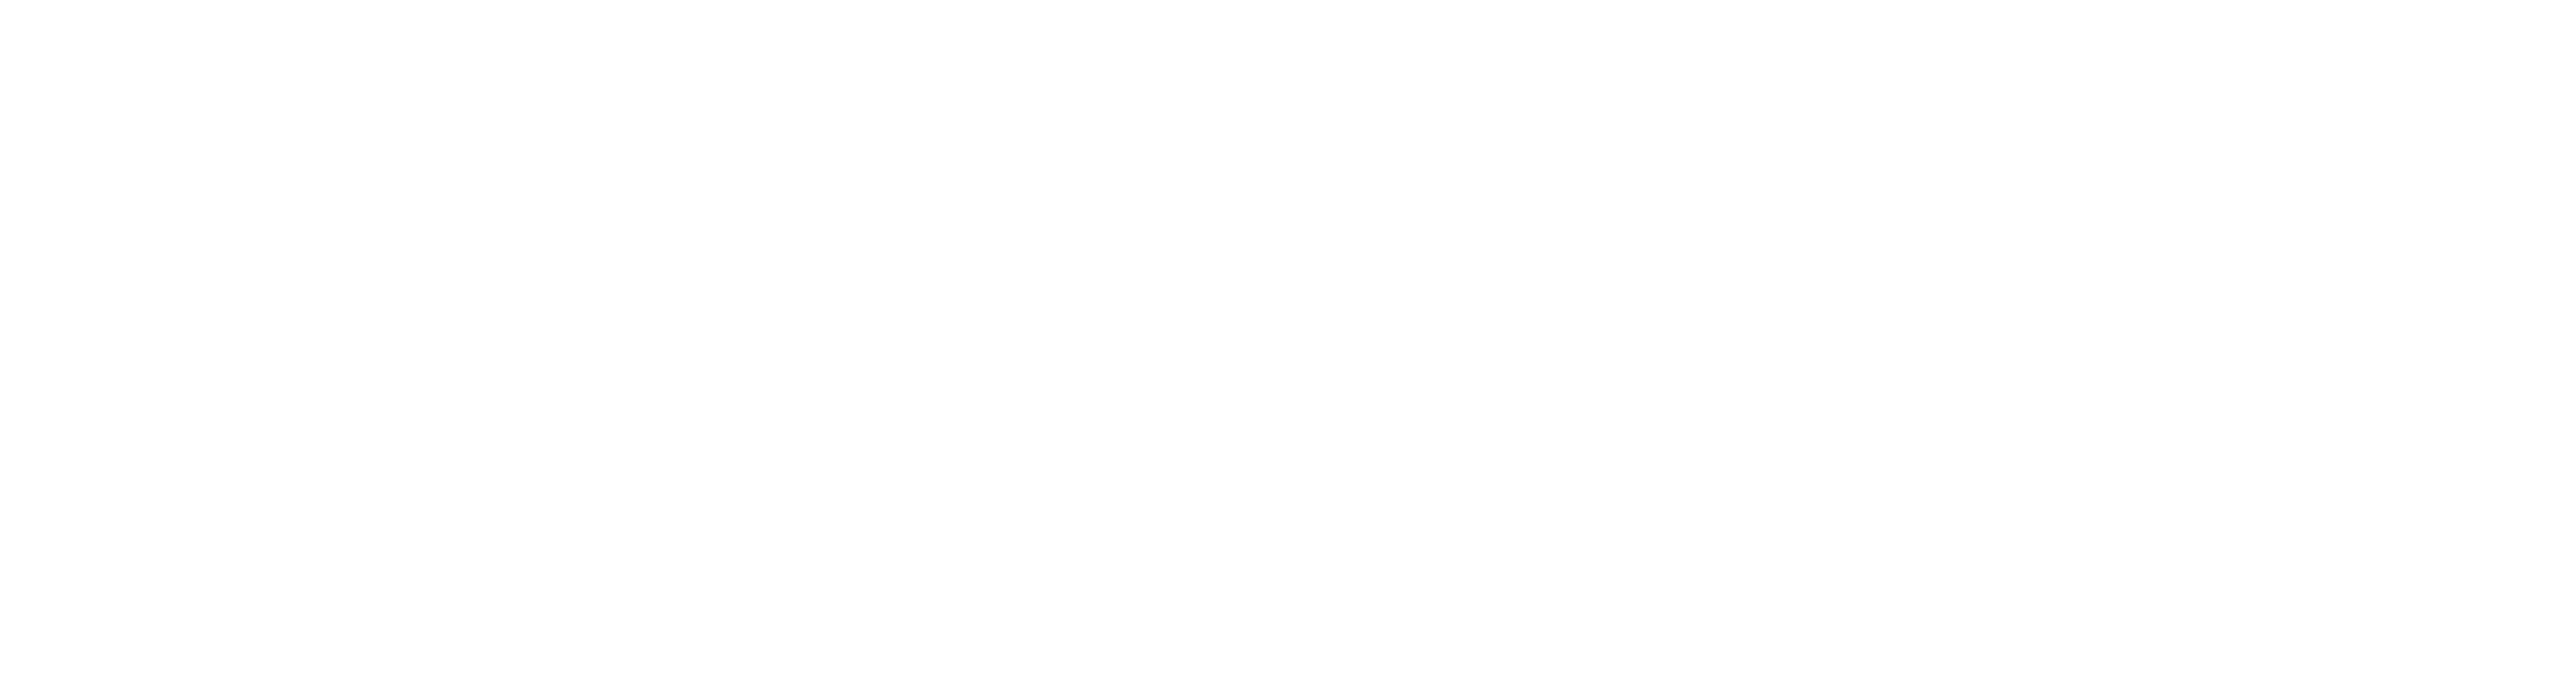 GajShield - Data Security Firewall